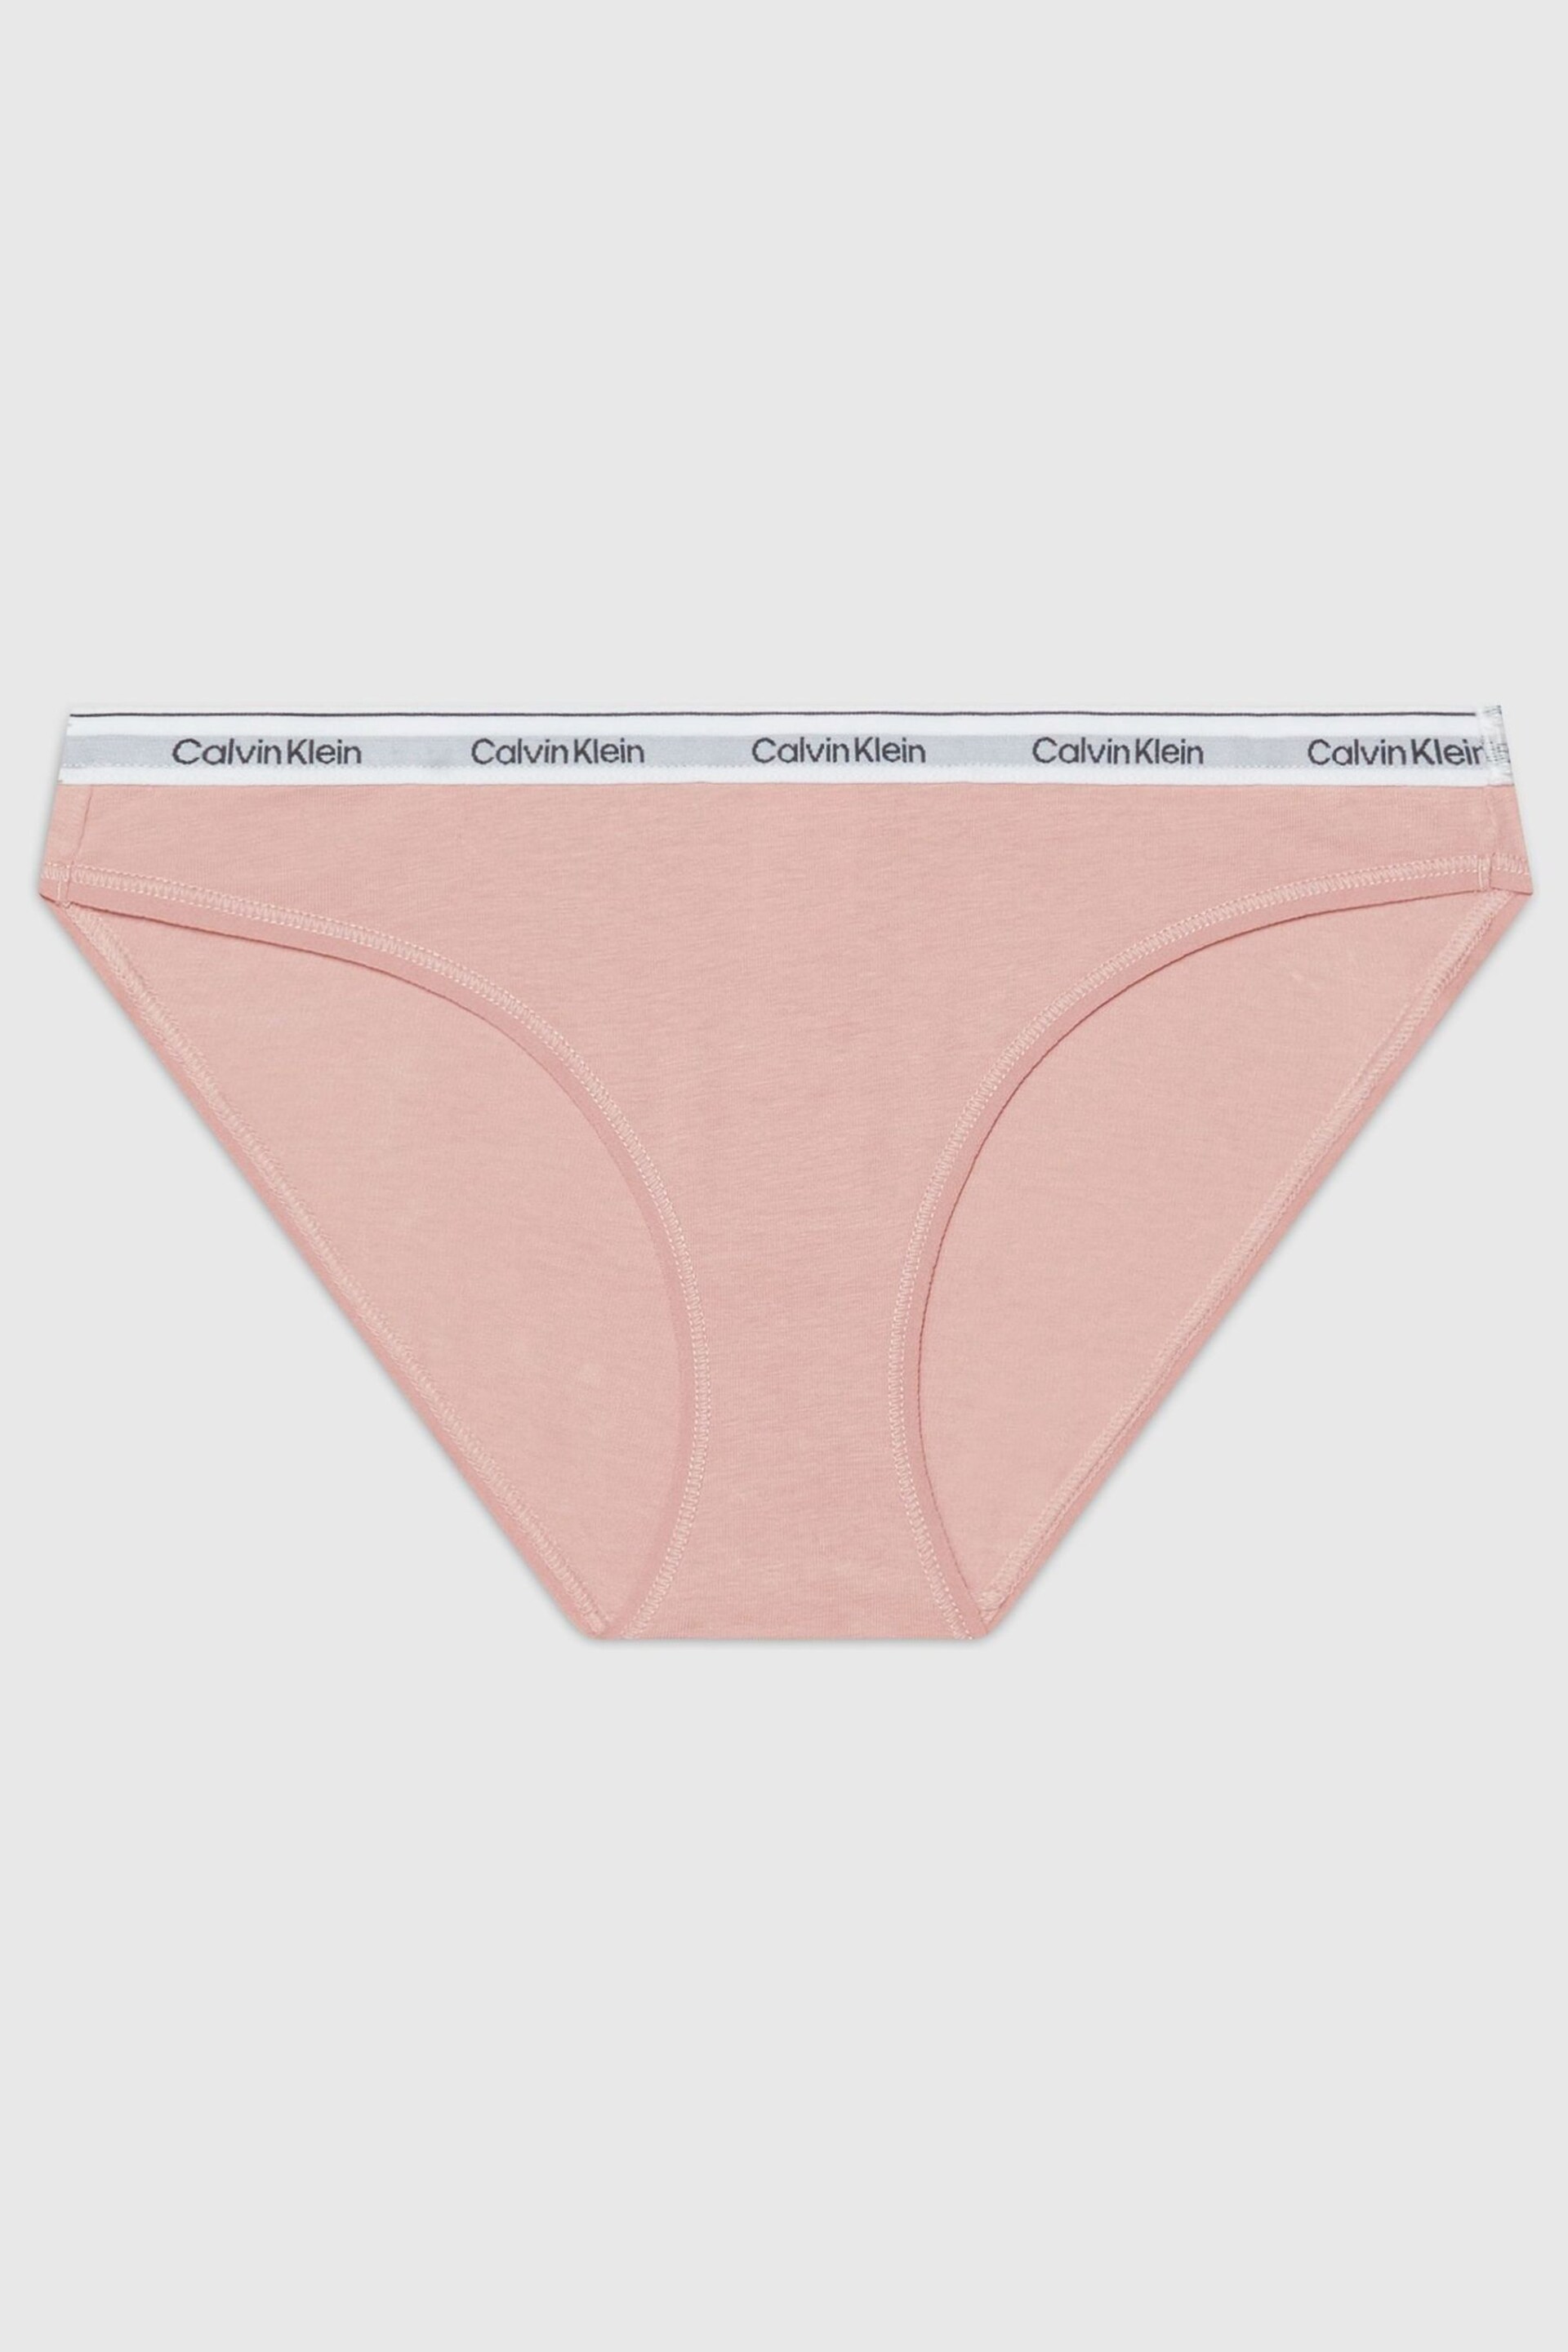 Calvin Klein White Single Bikini Briefs - Image 4 of 4